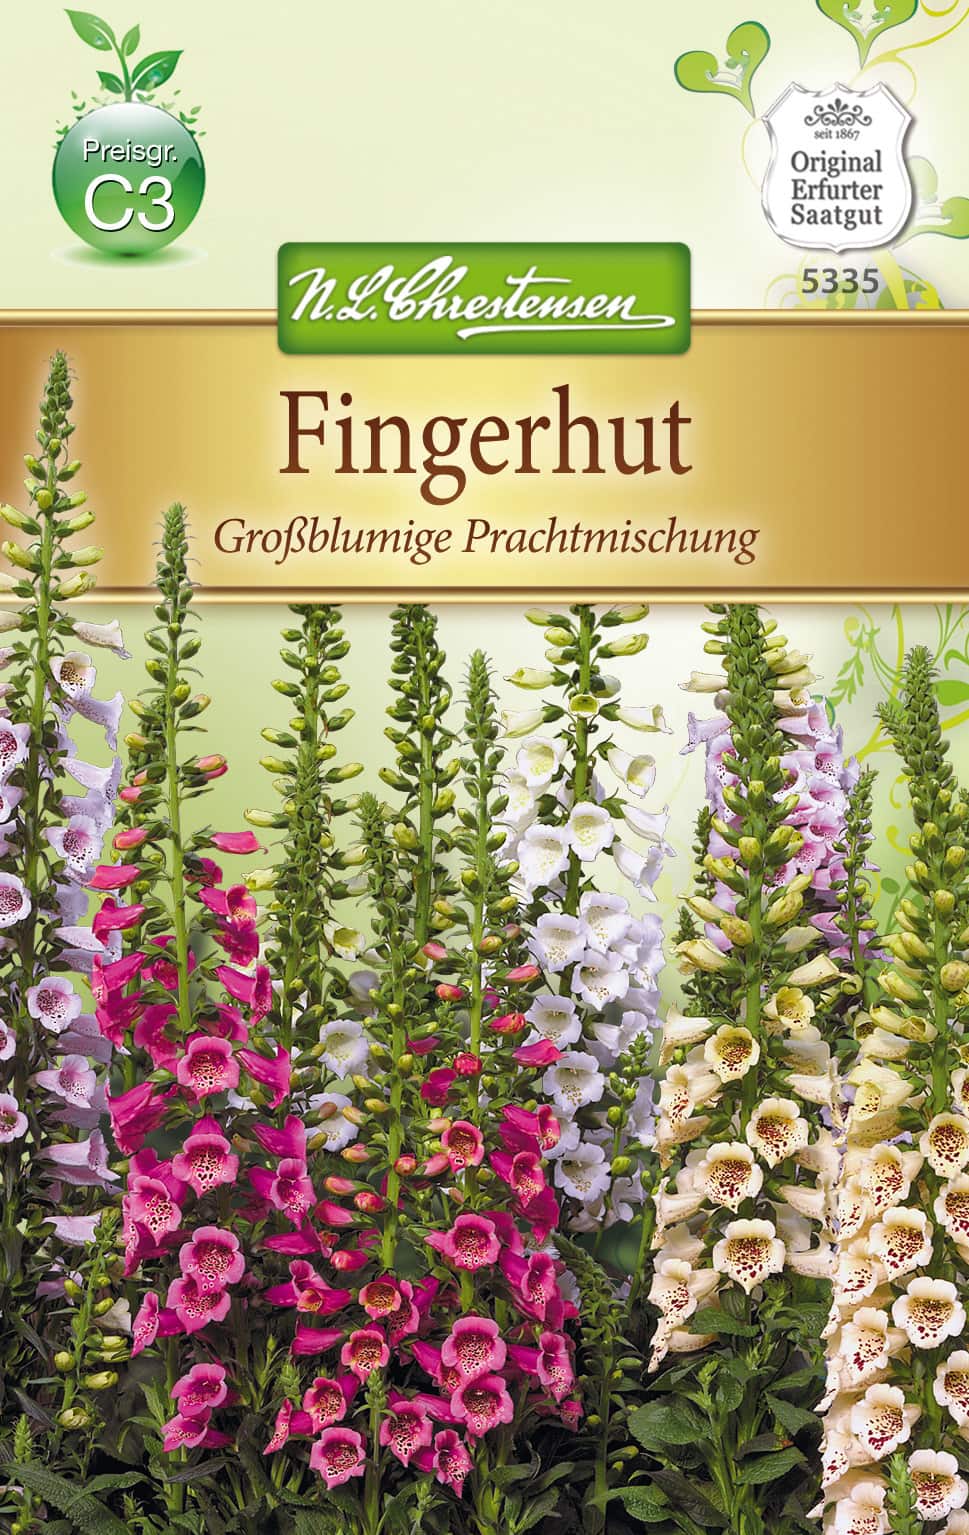 Digitalis Fingerhut, Großblumige Prachtmischung